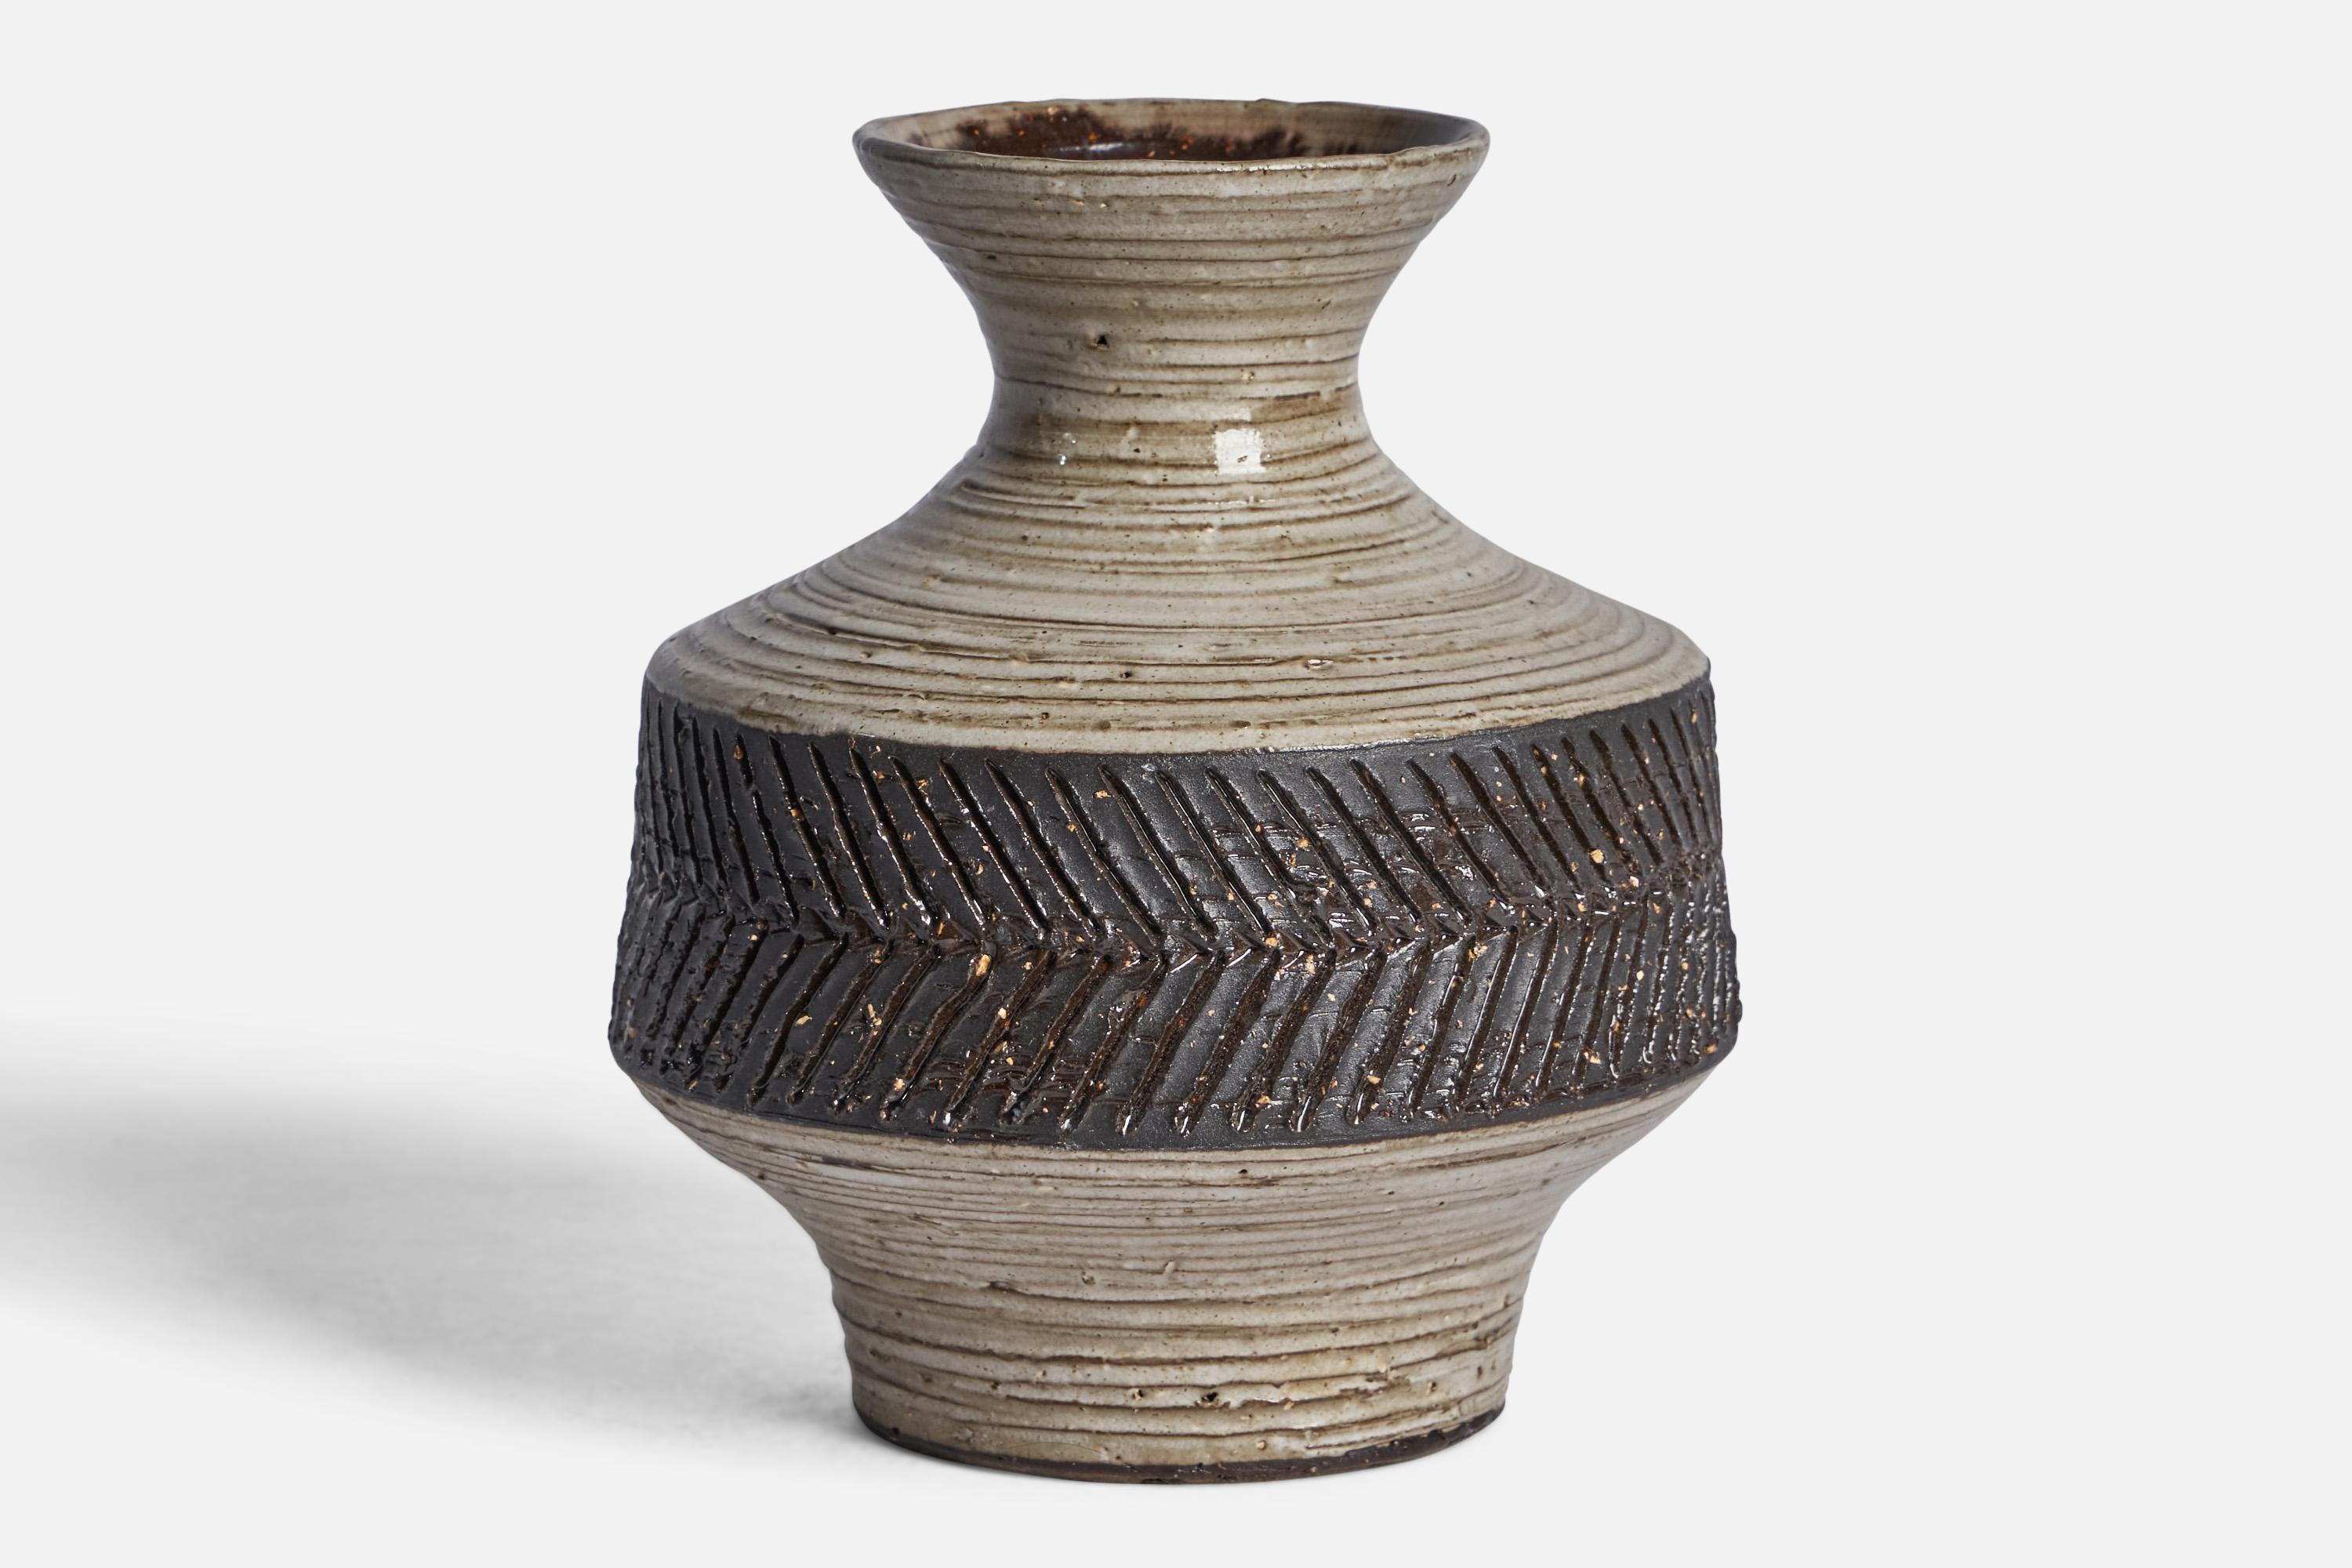 A grey and black-glazed ceramic vase designed and produced in Sweden, 1966.